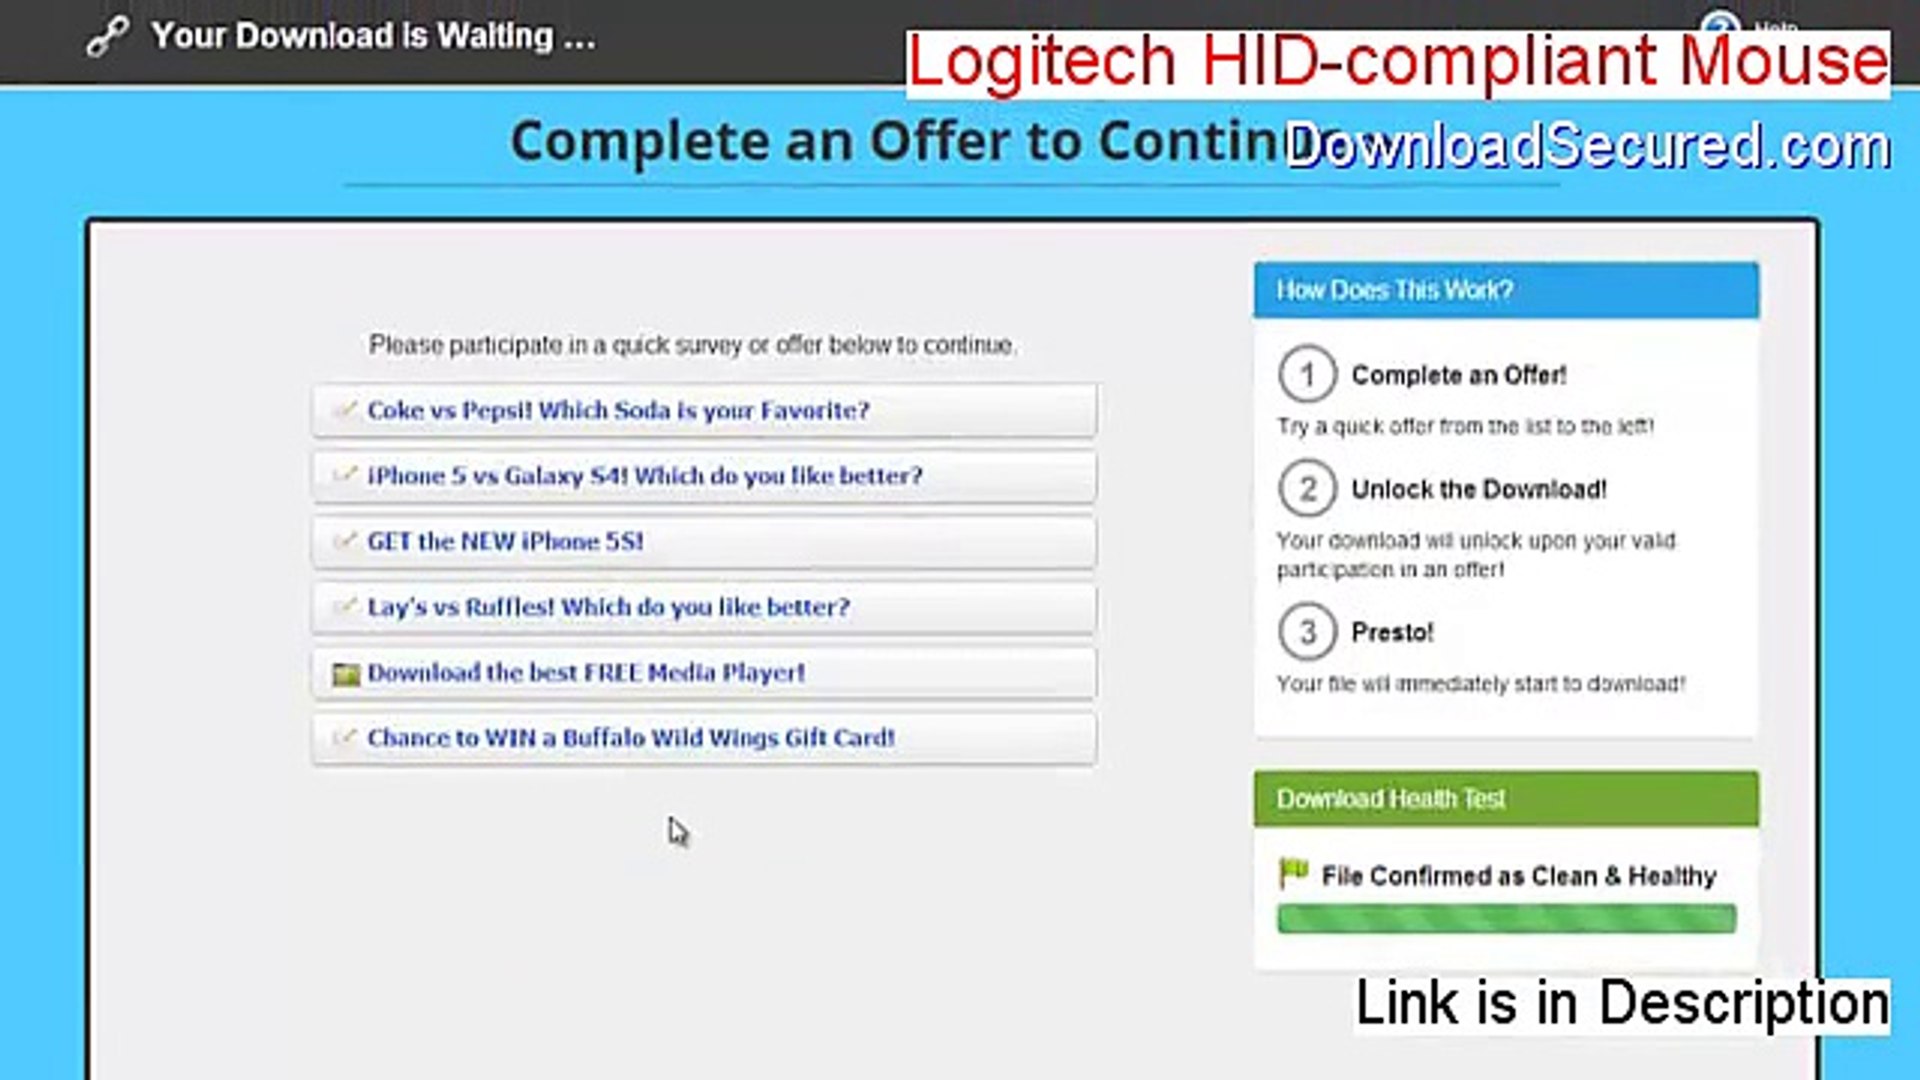 Logitech HID-compliant Mouse Key Gen [Legit Download 2015] - video  Dailymotion